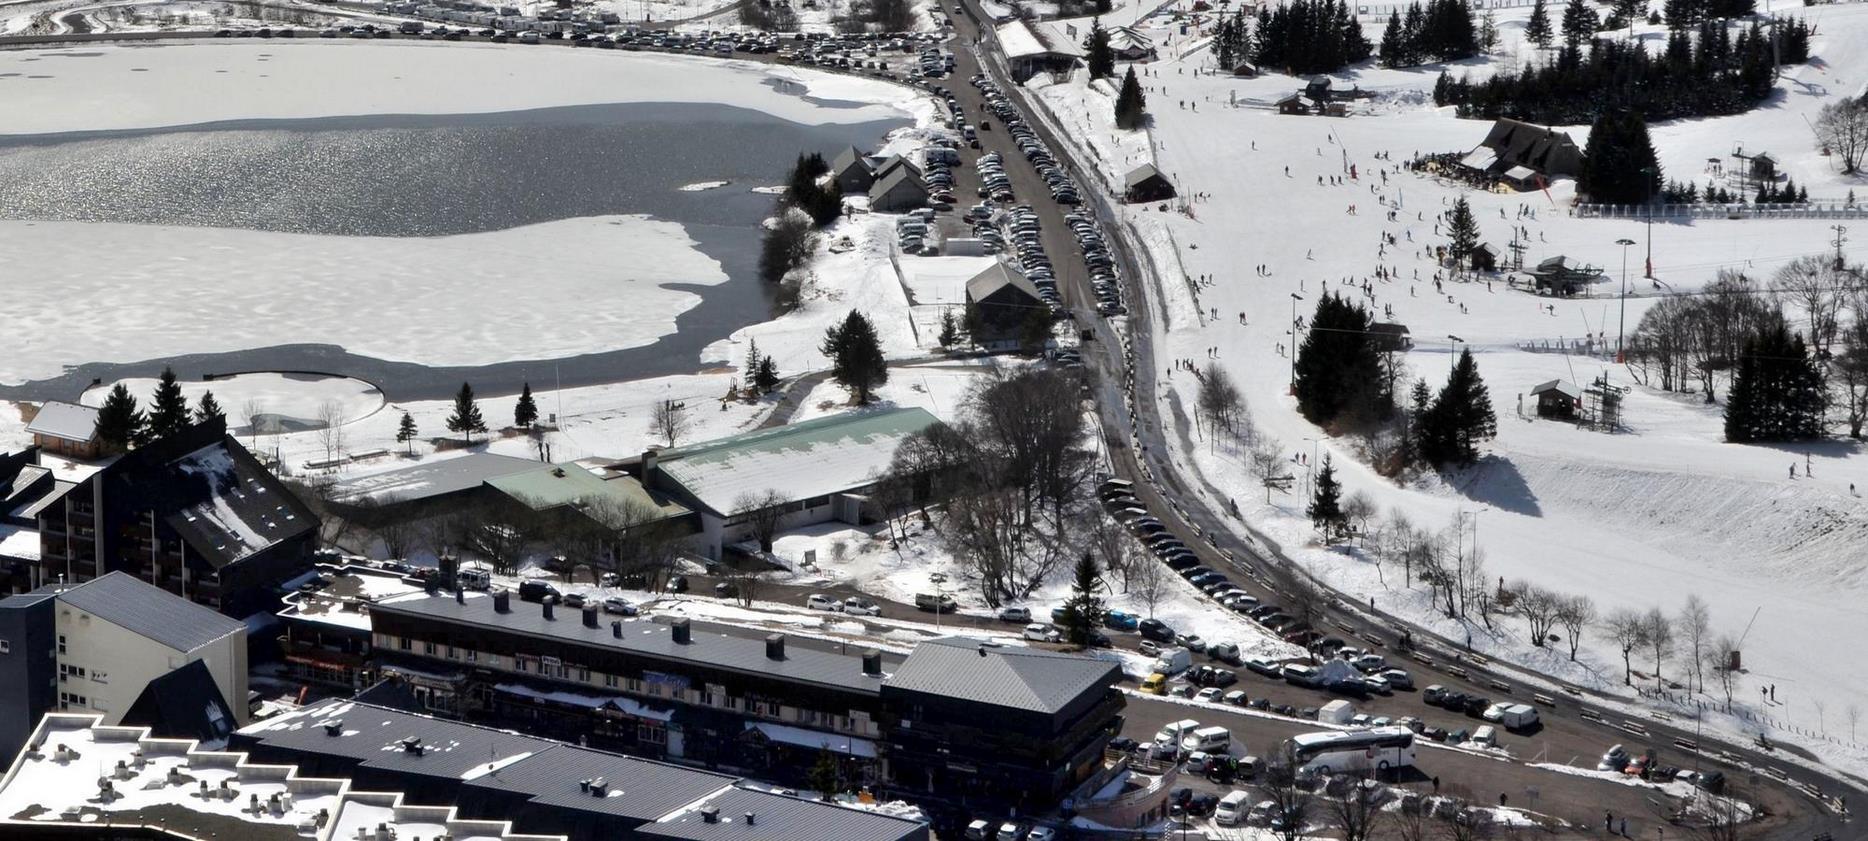 Super Besse - Center of the ski resort and children's area